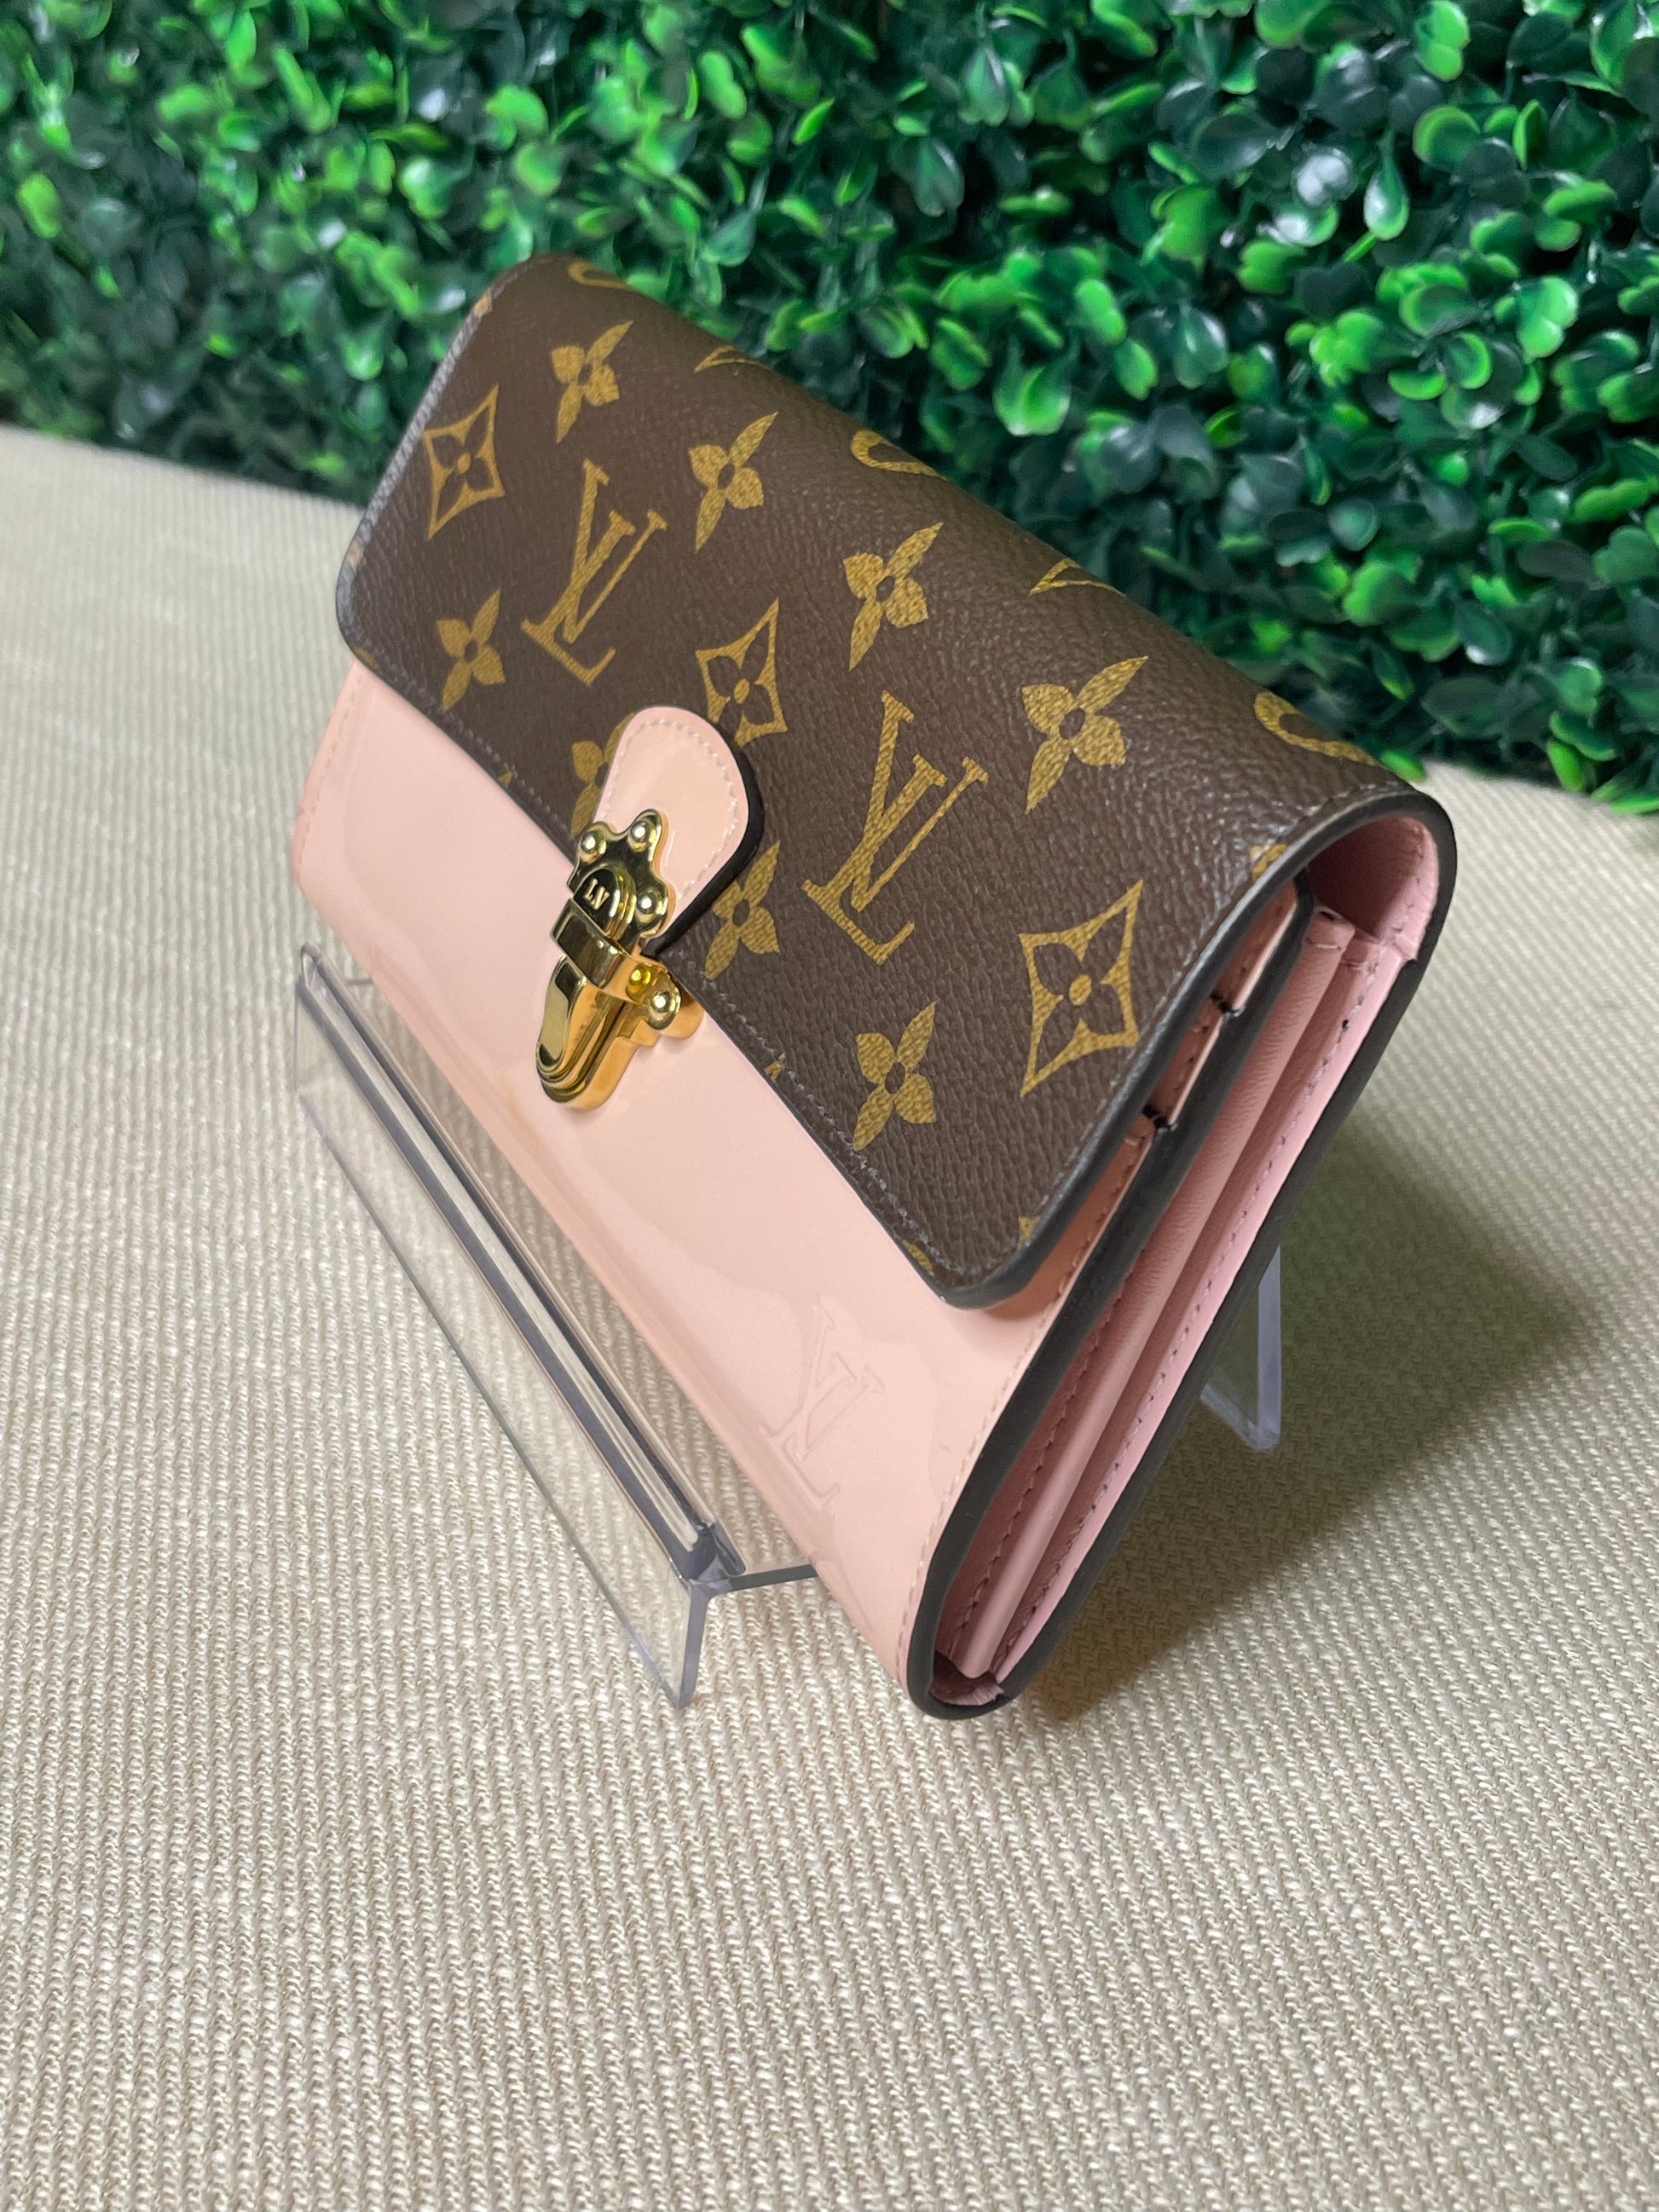 Louis Vuitton Cherrywood Chain Wallet Vernis with Monogram Canvas